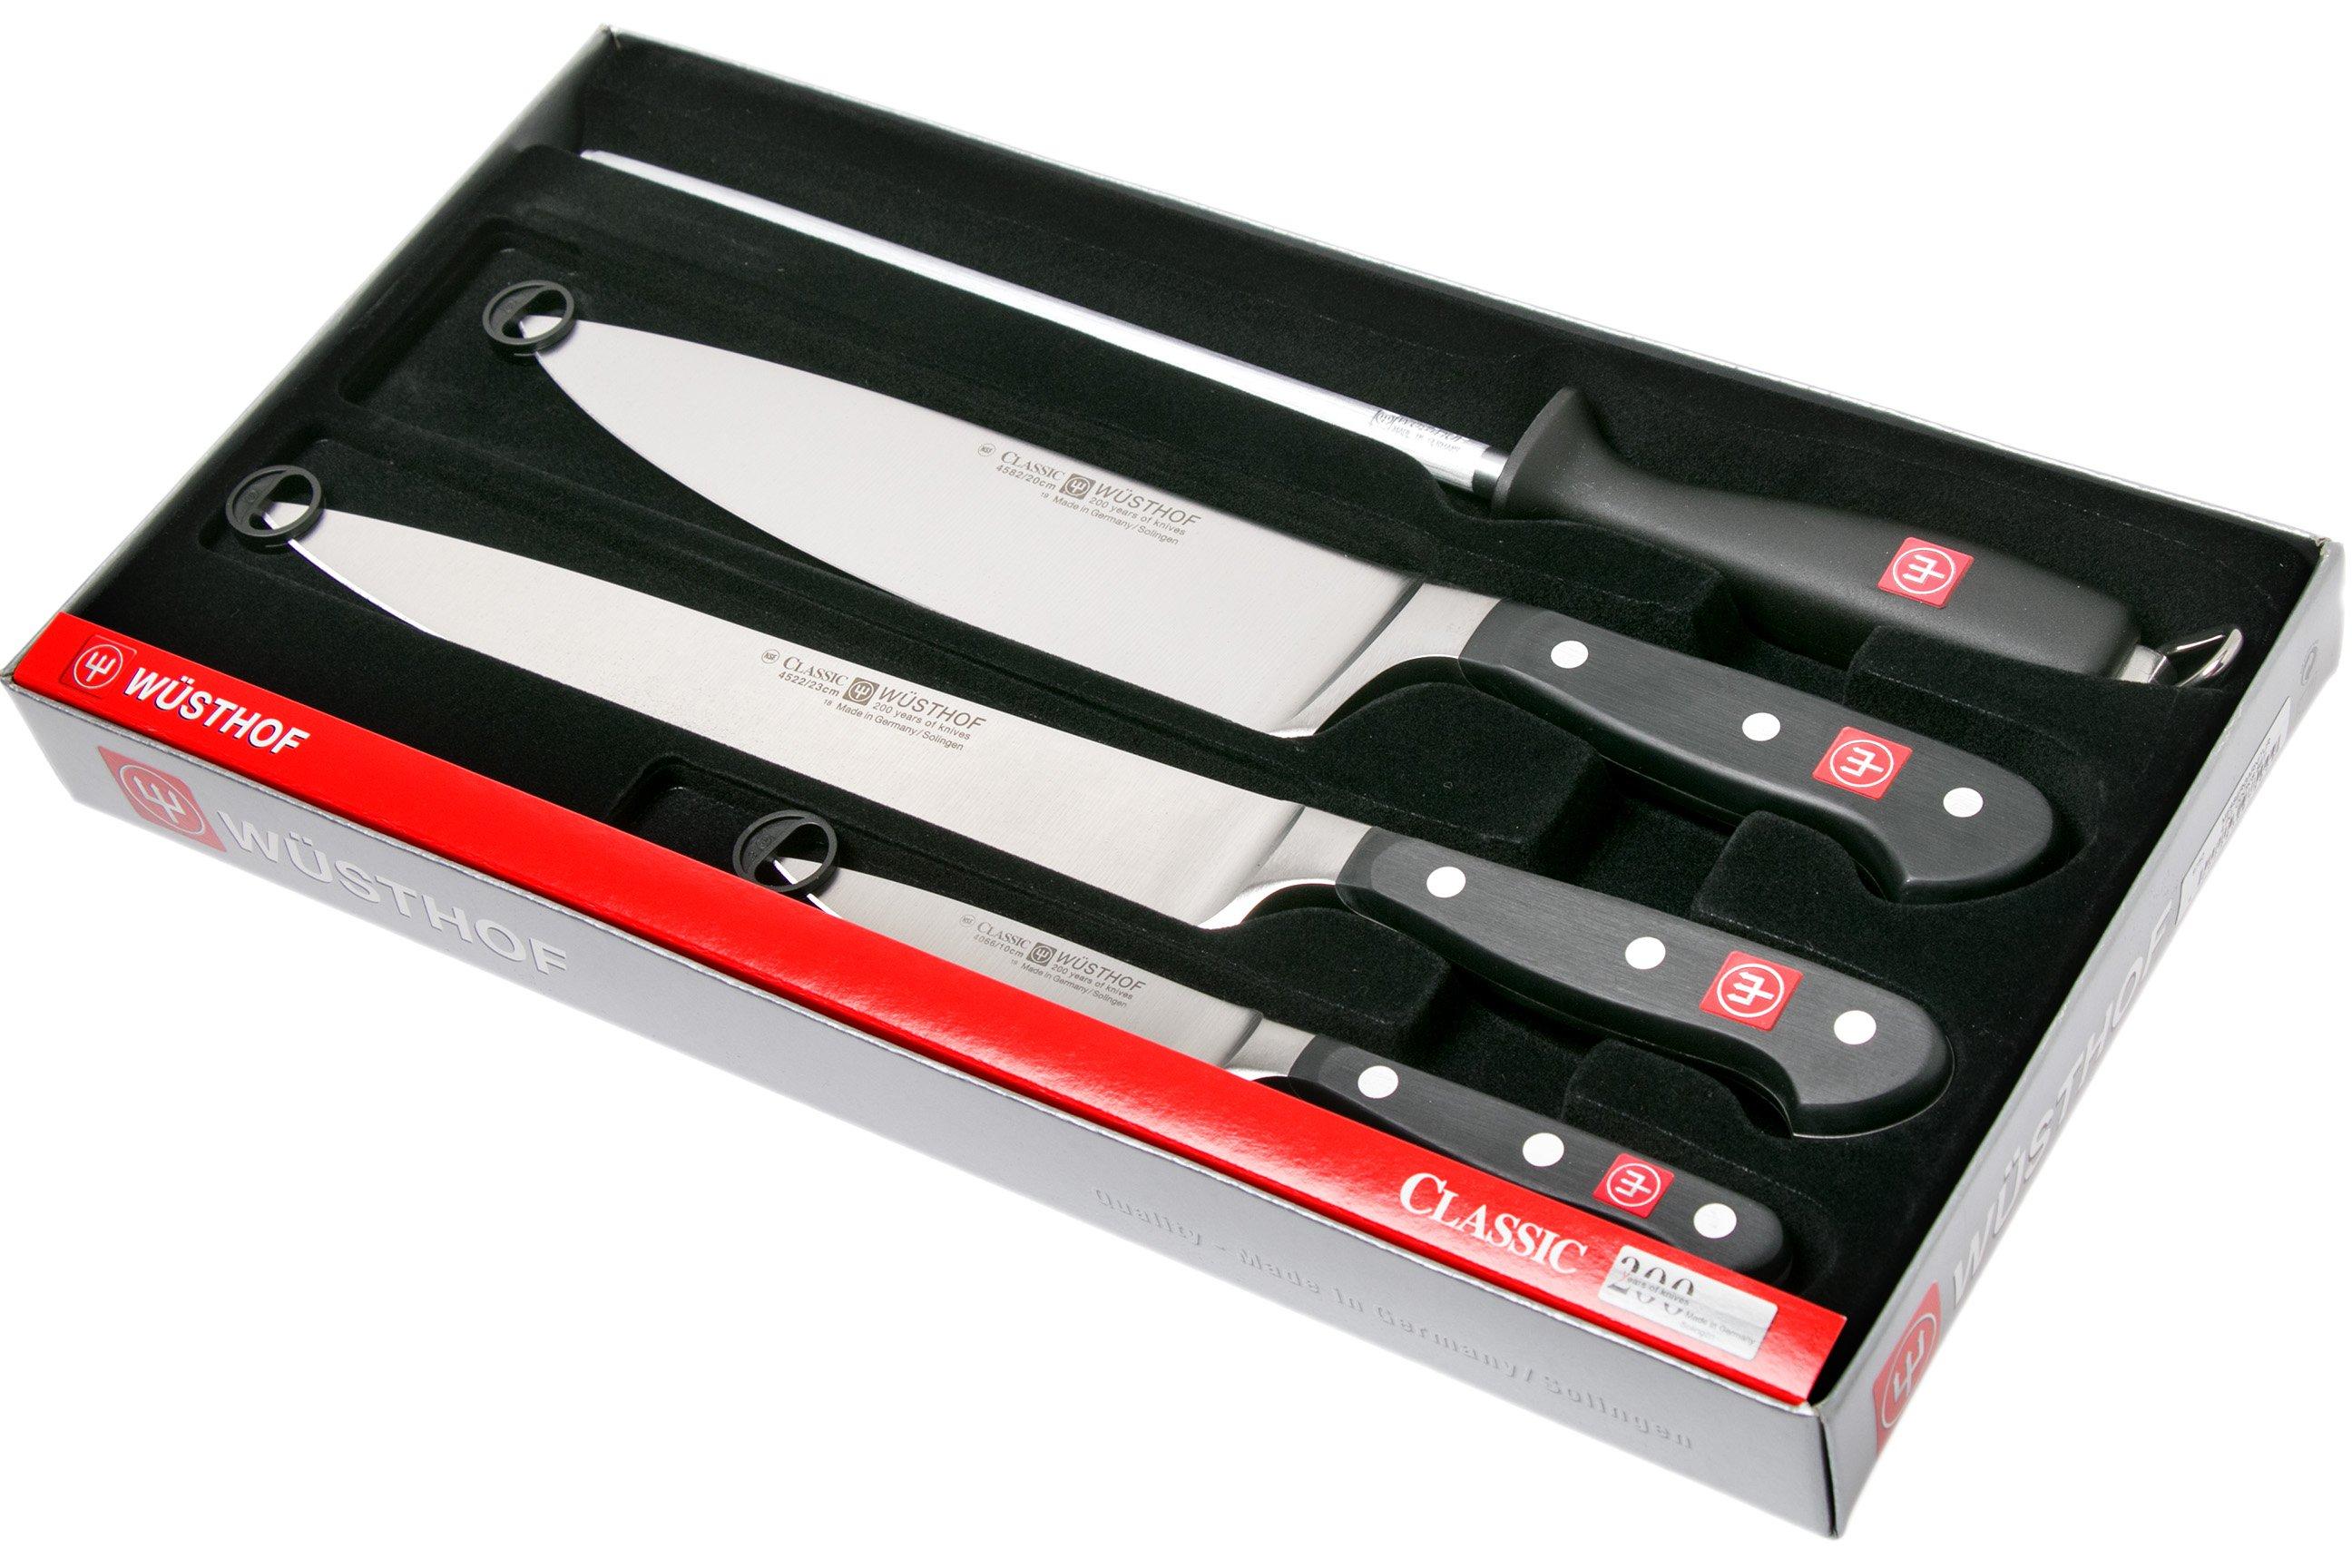 Wüsthof Classic Knife Set 4-piece, 9750 | Advantageously shopping at ...